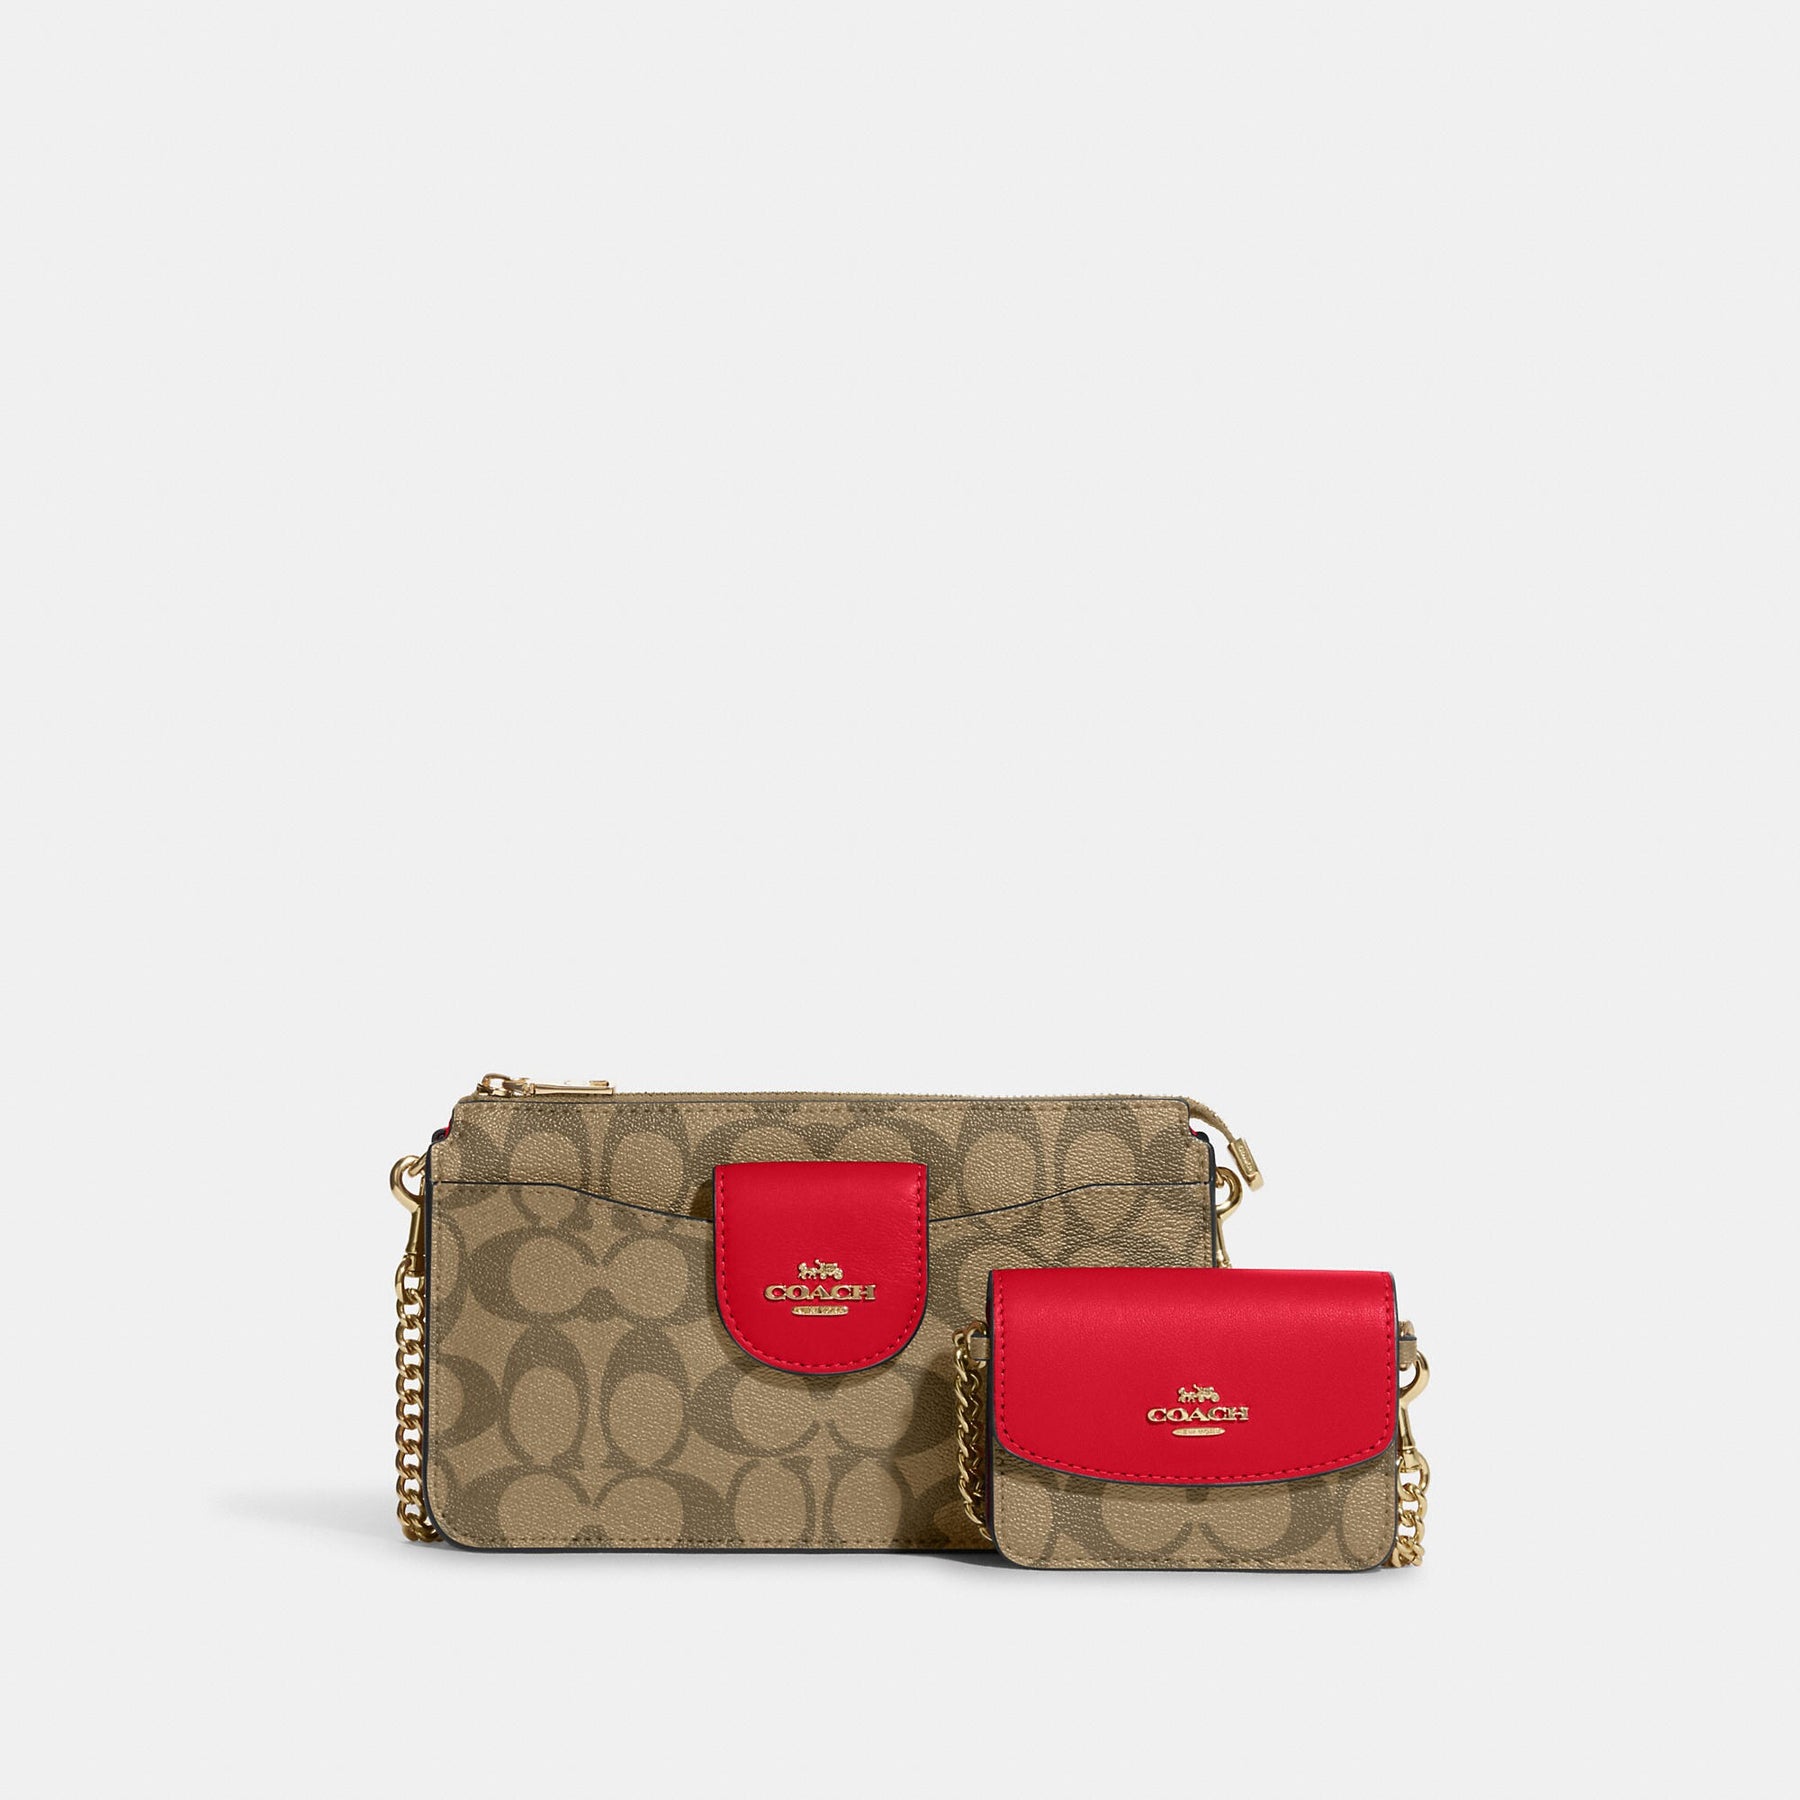 Coach poppy crossbody bag - Women's handbags